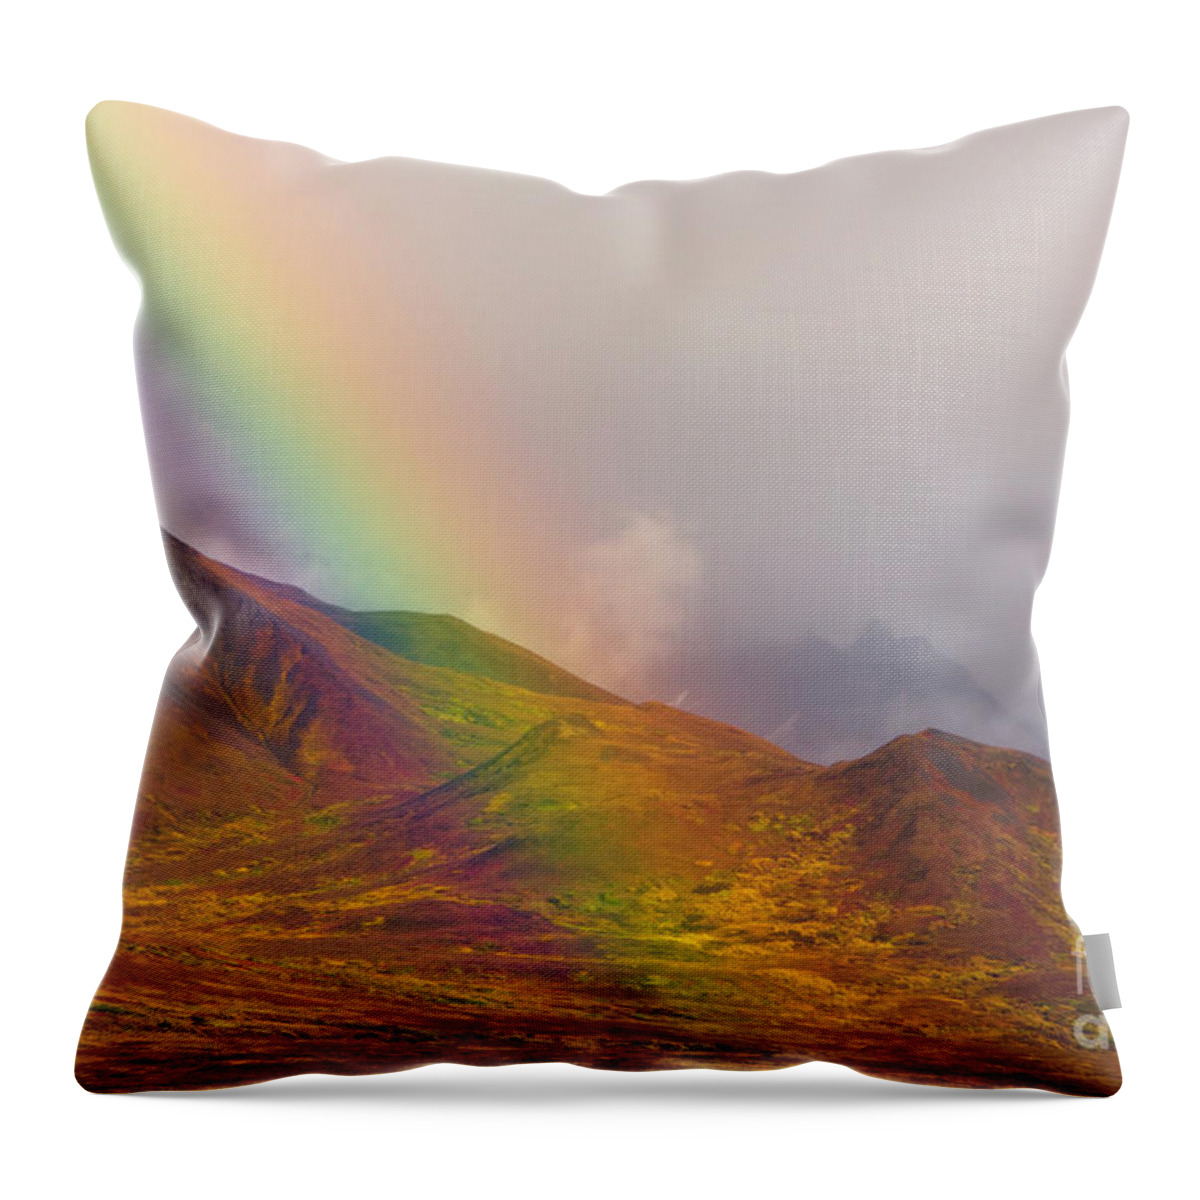 00431055 Throw Pillow featuring the photograph Rainbow Over Fall Tundra in Denali by Yva Momatiuk John Eastcott